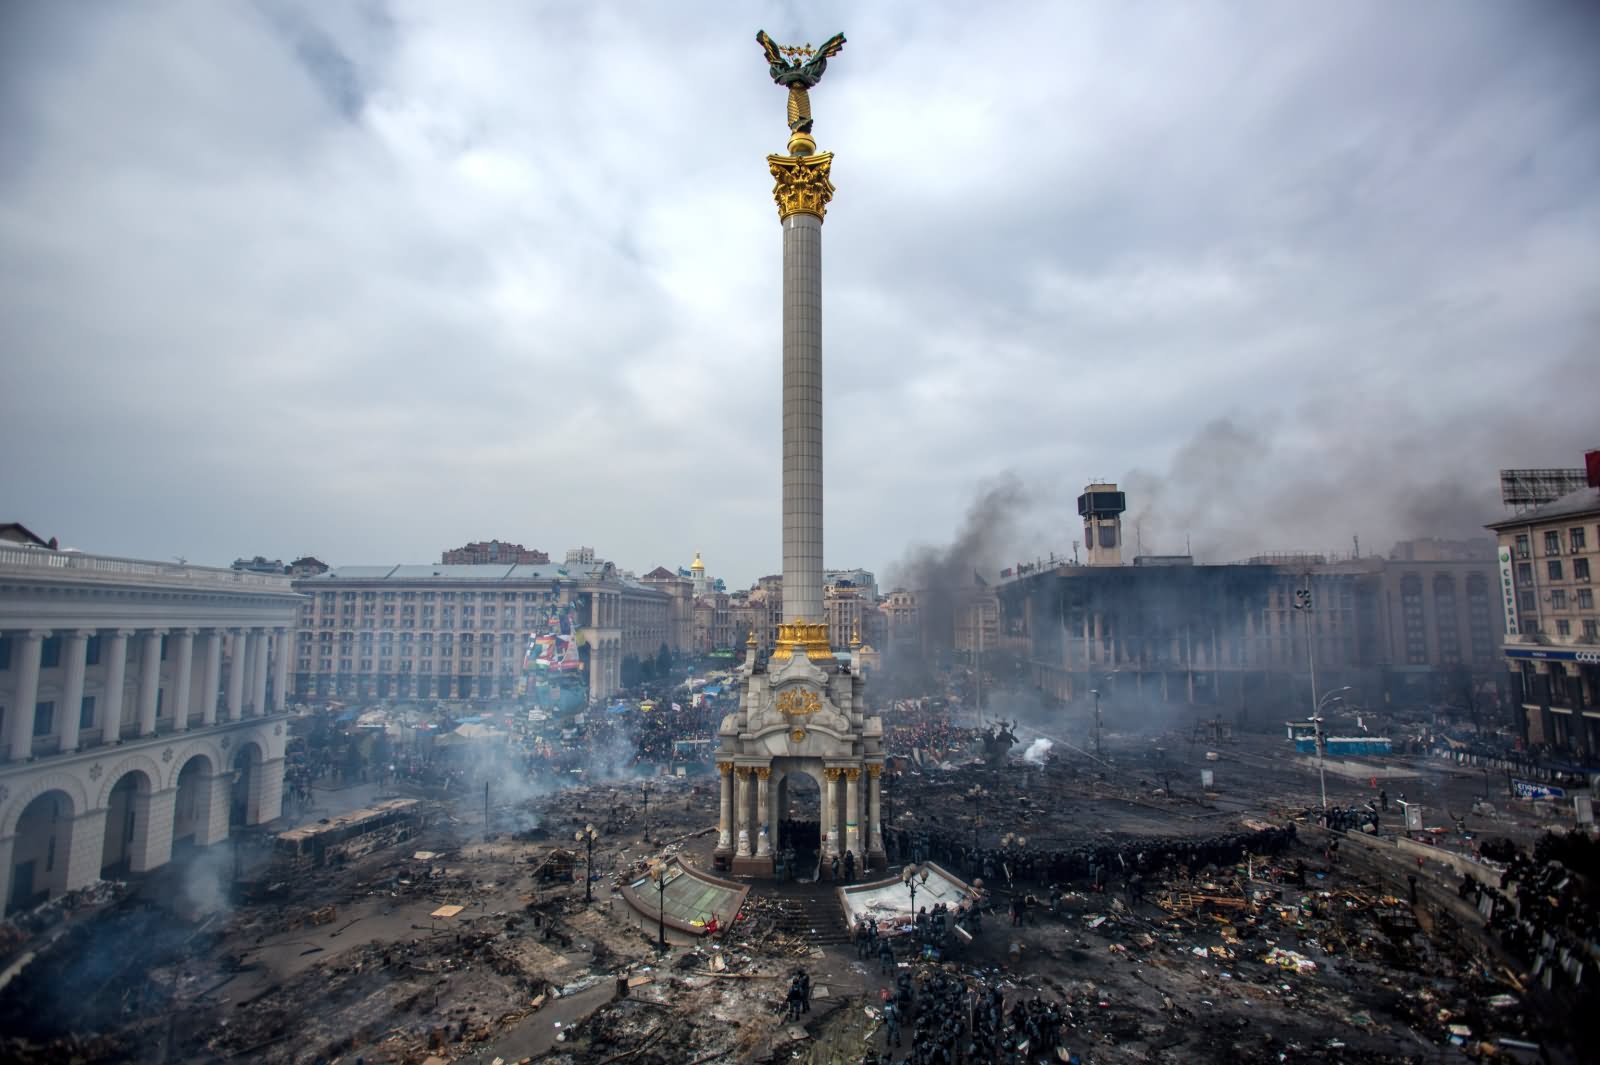 Fire Smoke And Protesters On Maidan Nezalezhnosti Square In Kiev, Ukraine